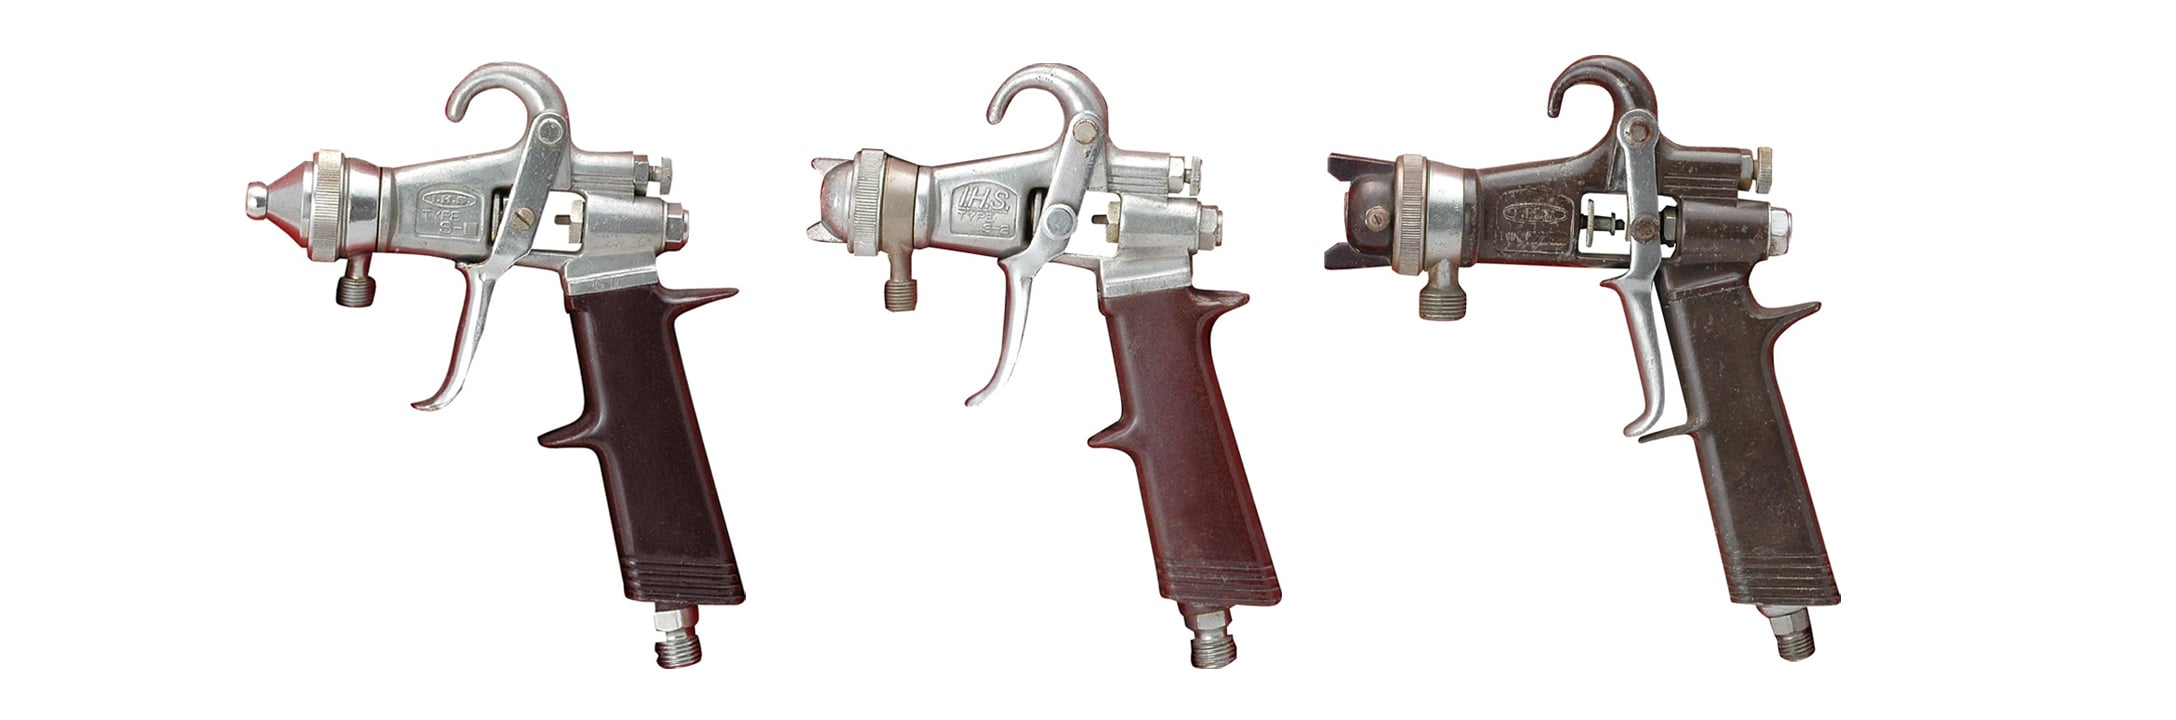 pistolas de pintura japonesas aerógrafos prototipos